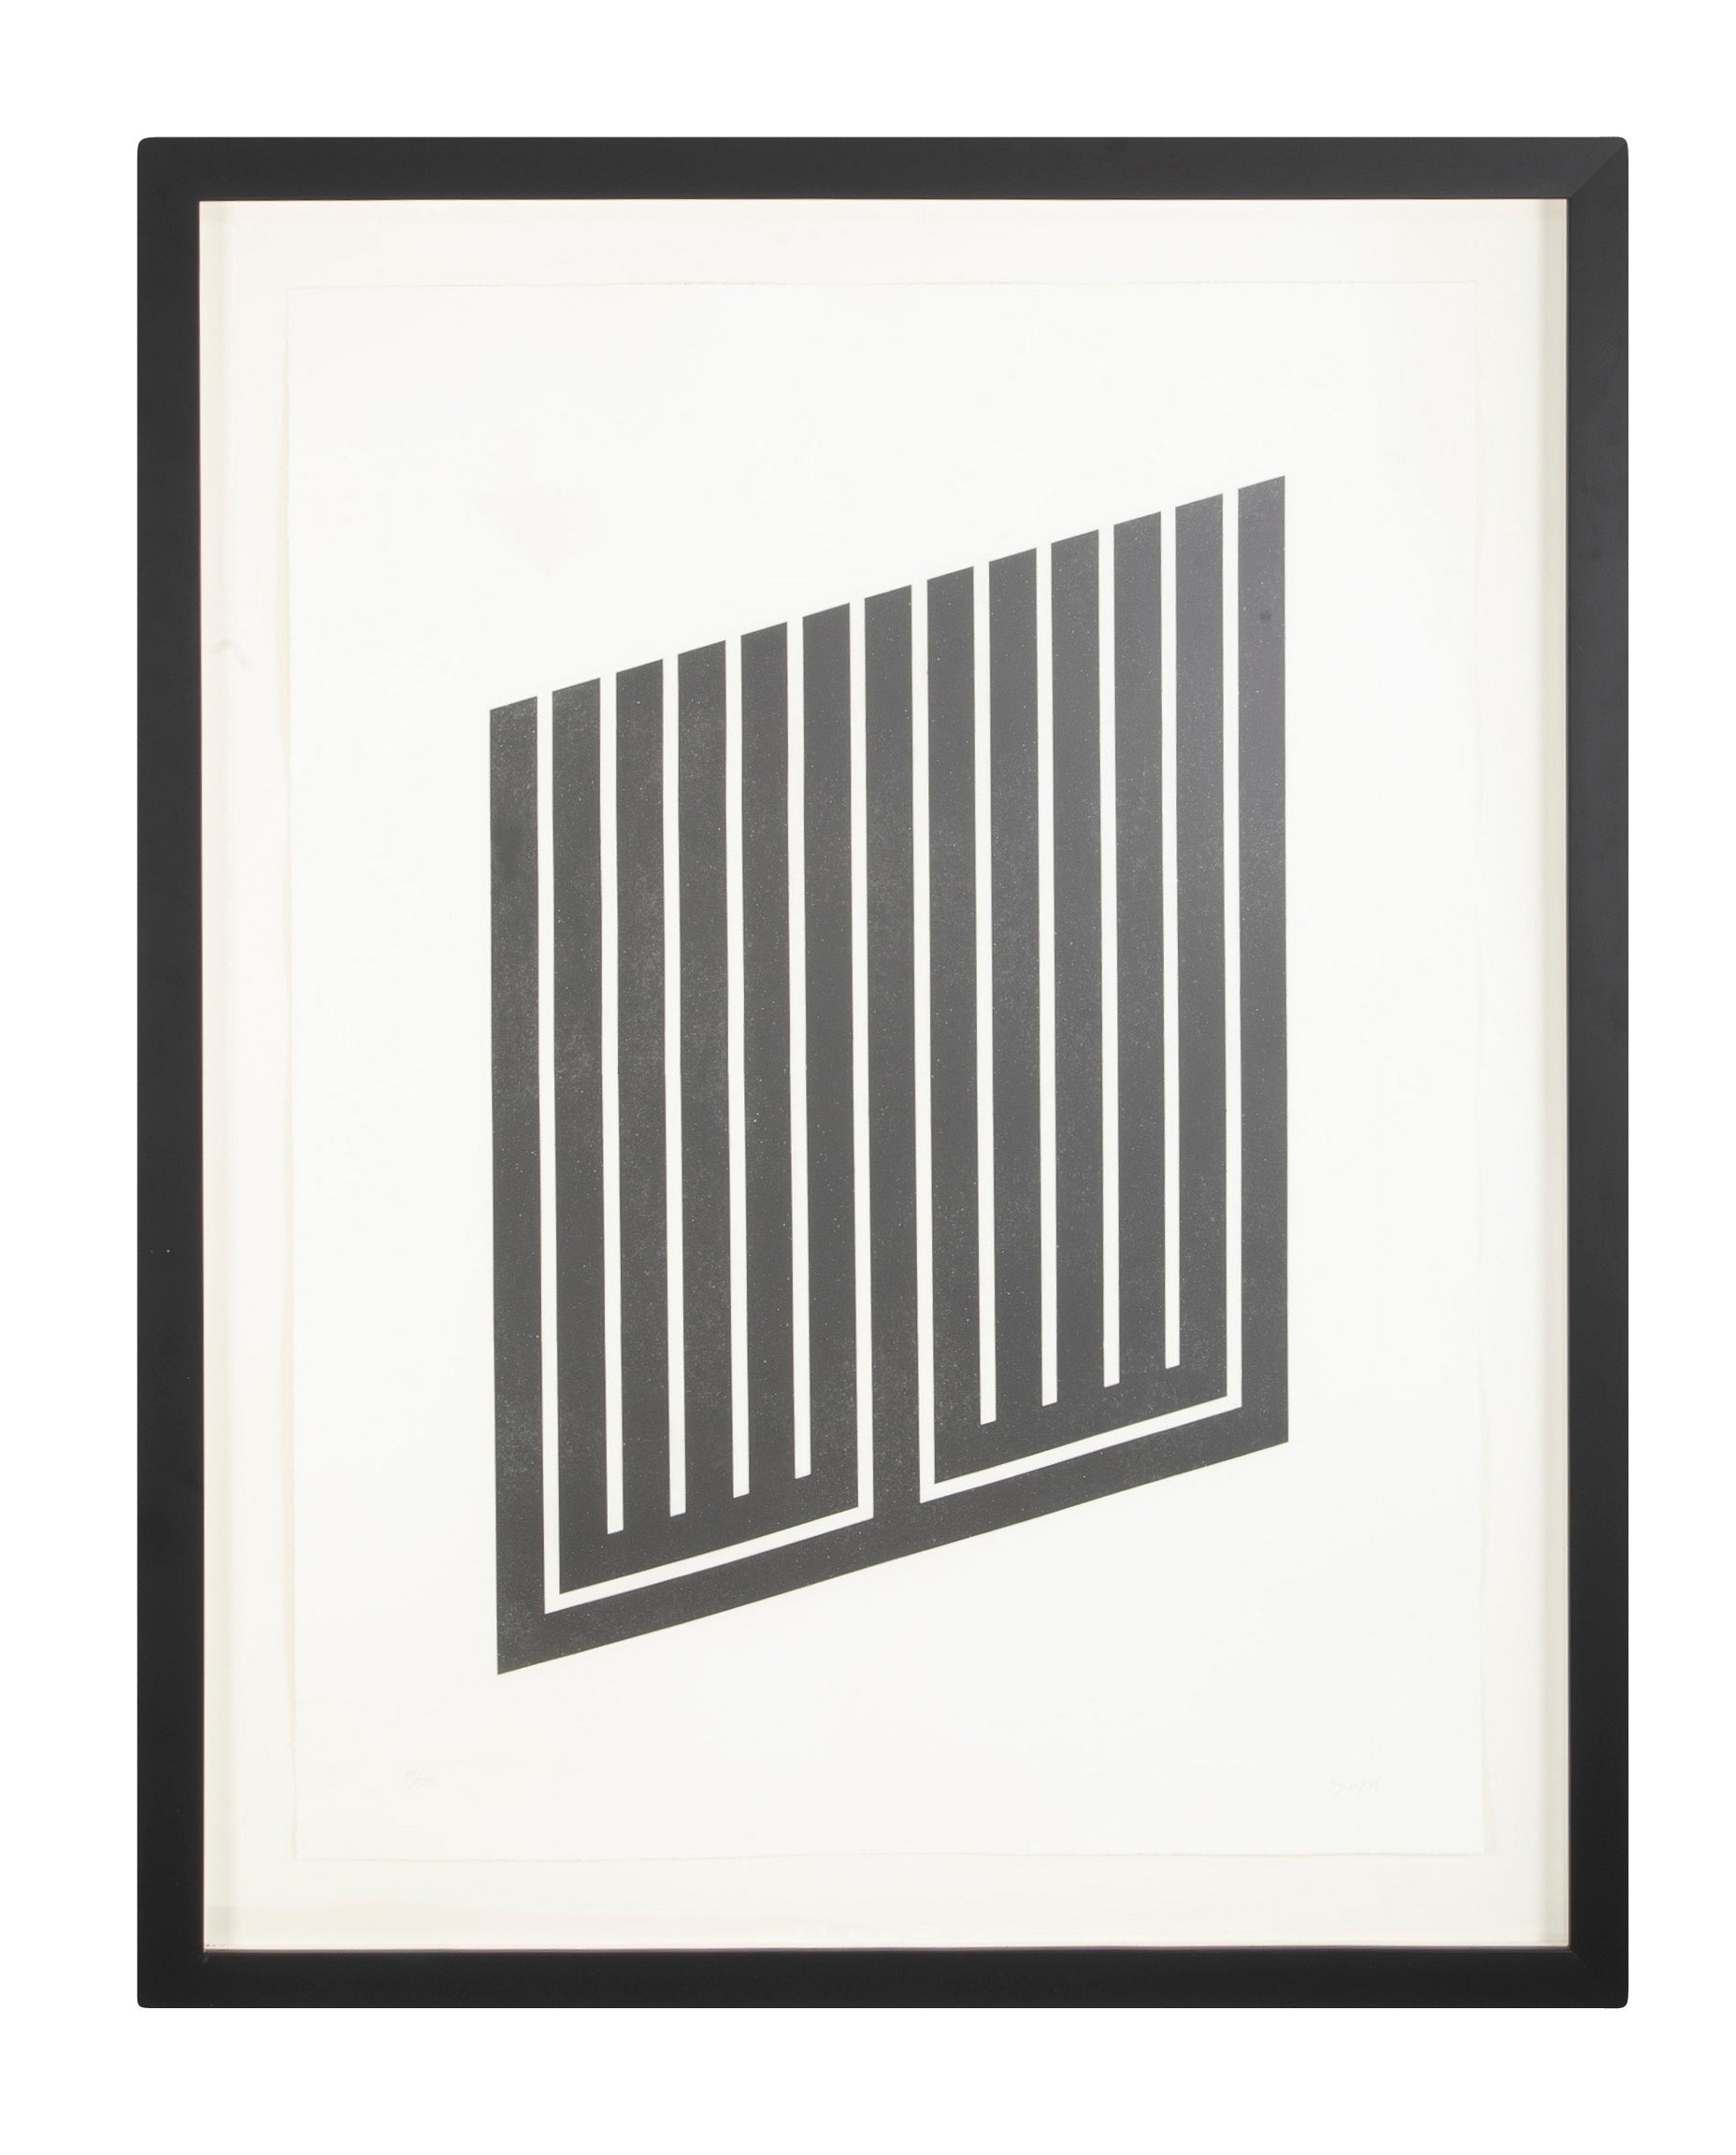 Donald Judd, Untitled, 1978-1979